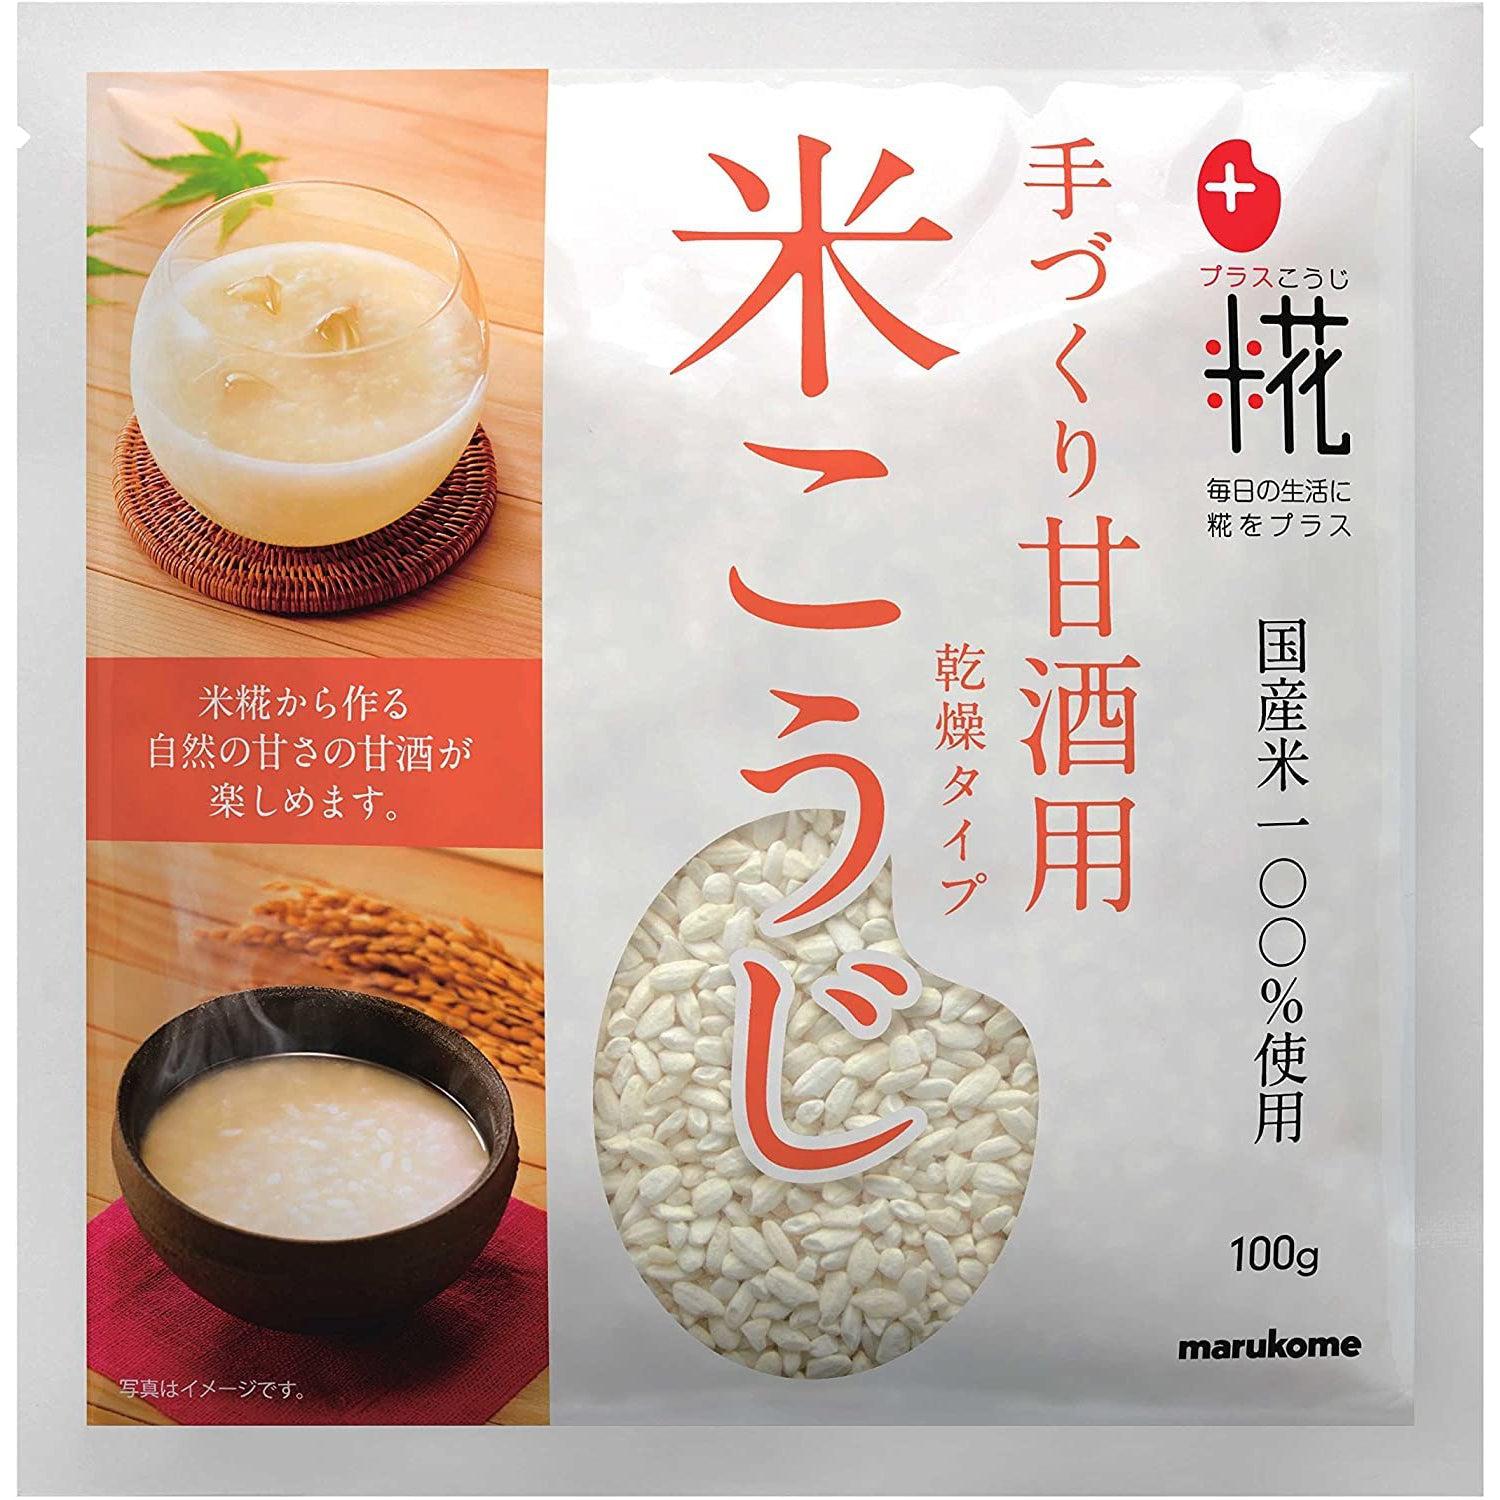 Marukome Plus Koji Dried Malted Rice for Amazake Rice Drink 100g